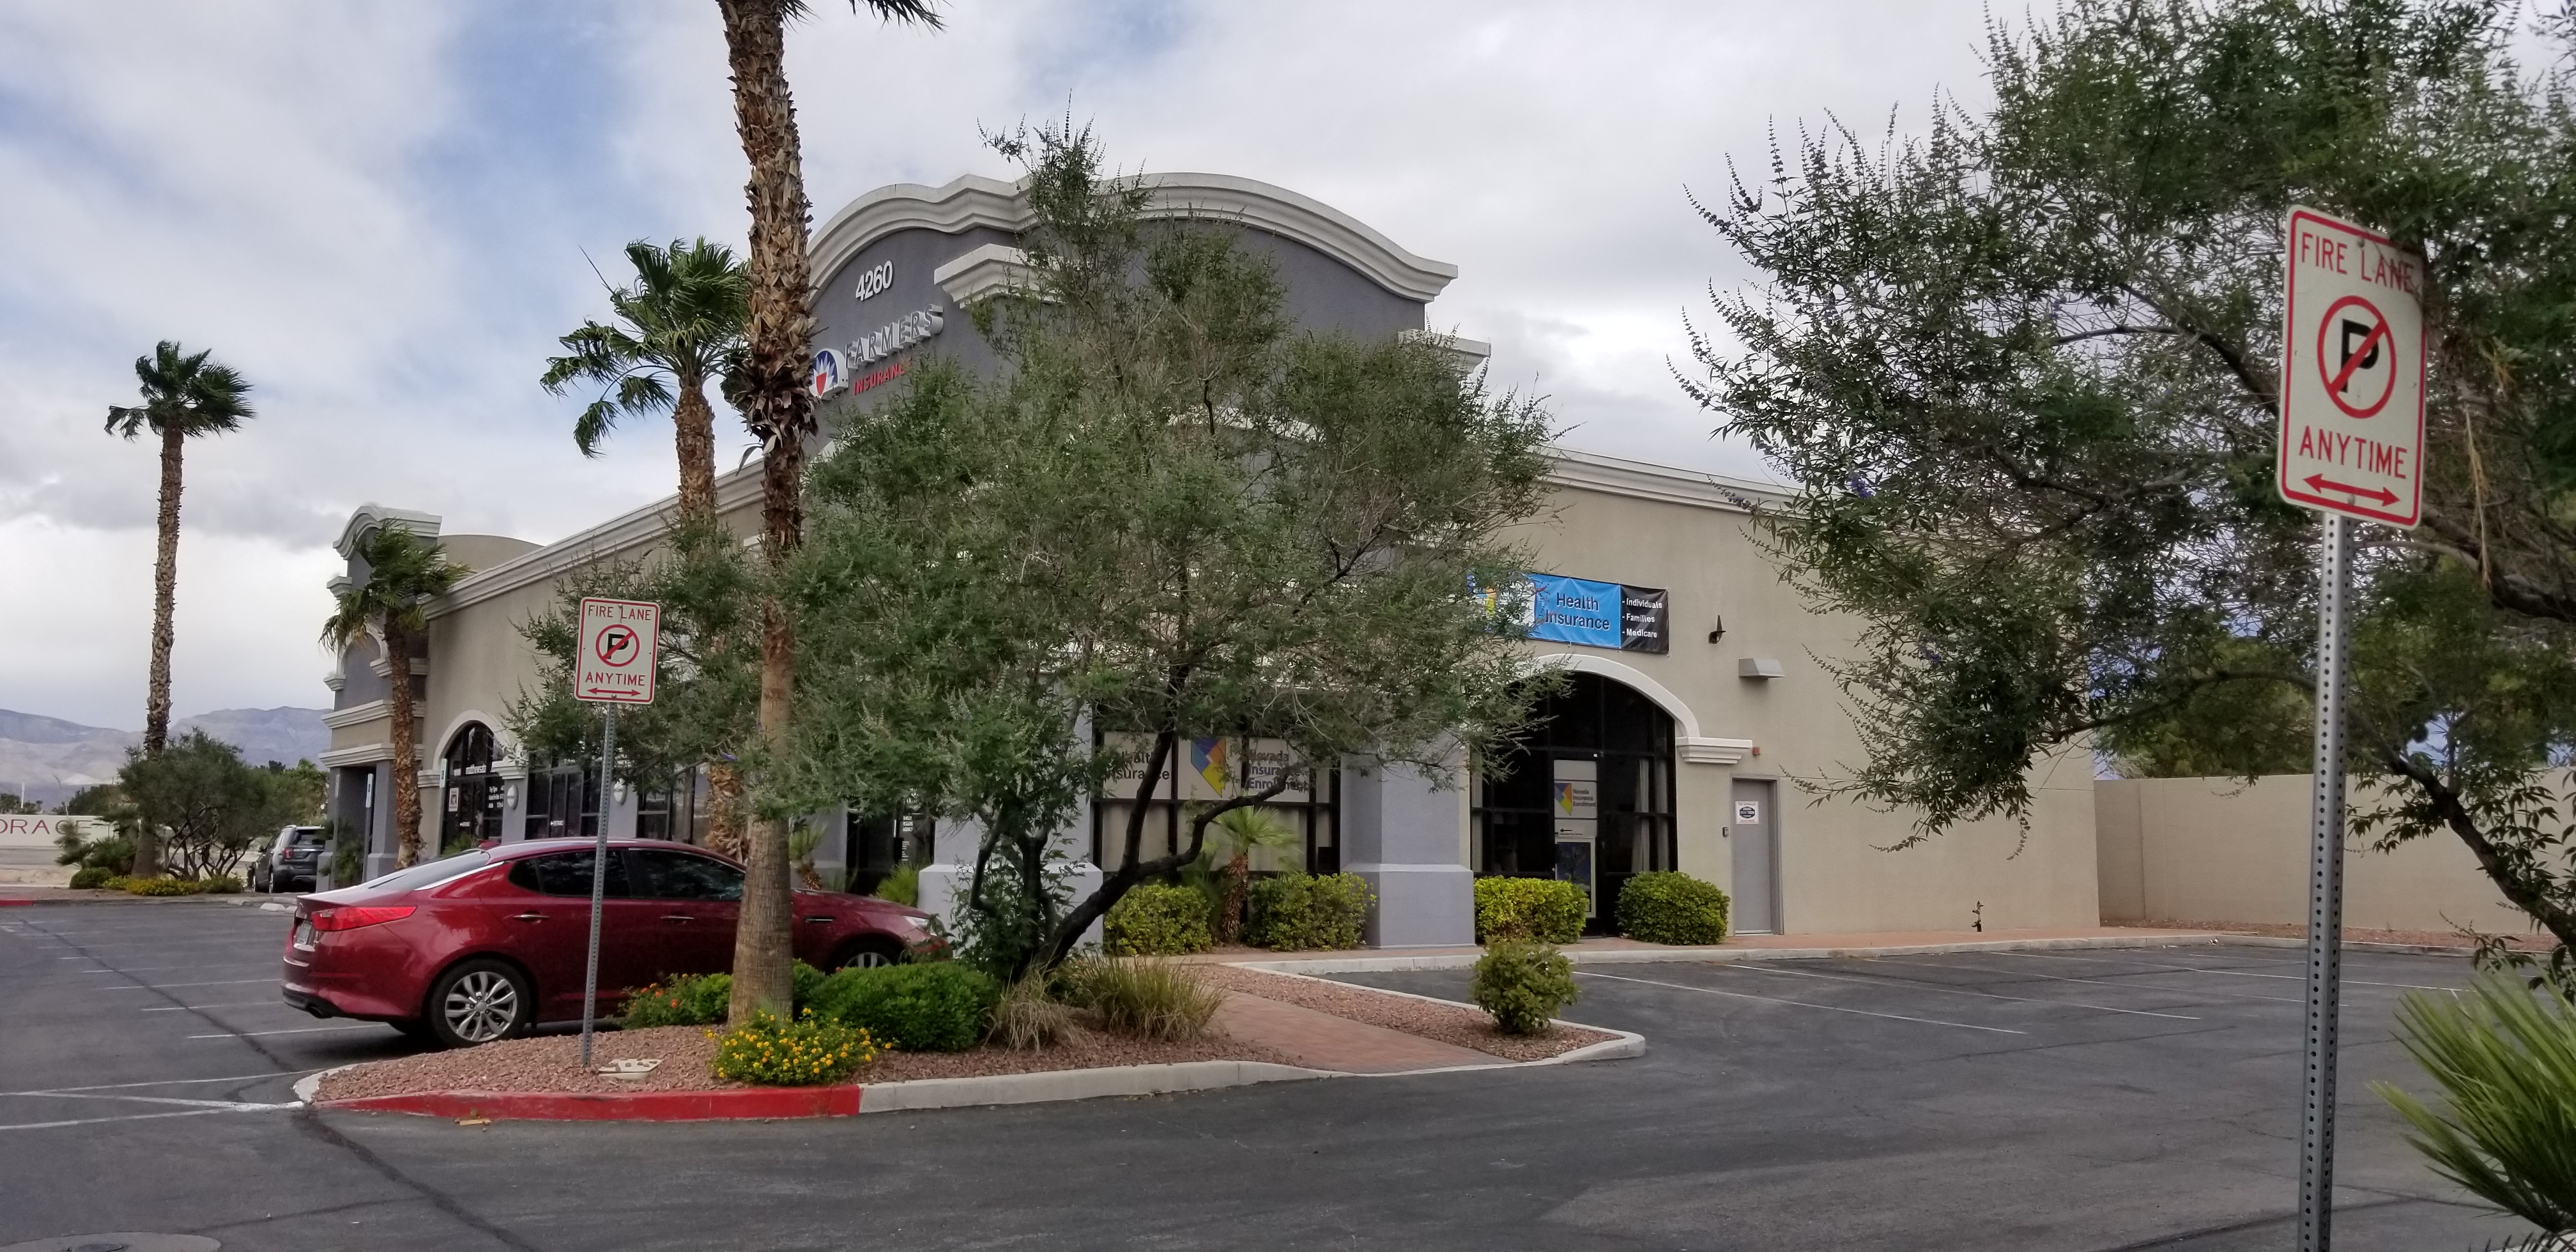 Nevada Insurance Enrollment - office